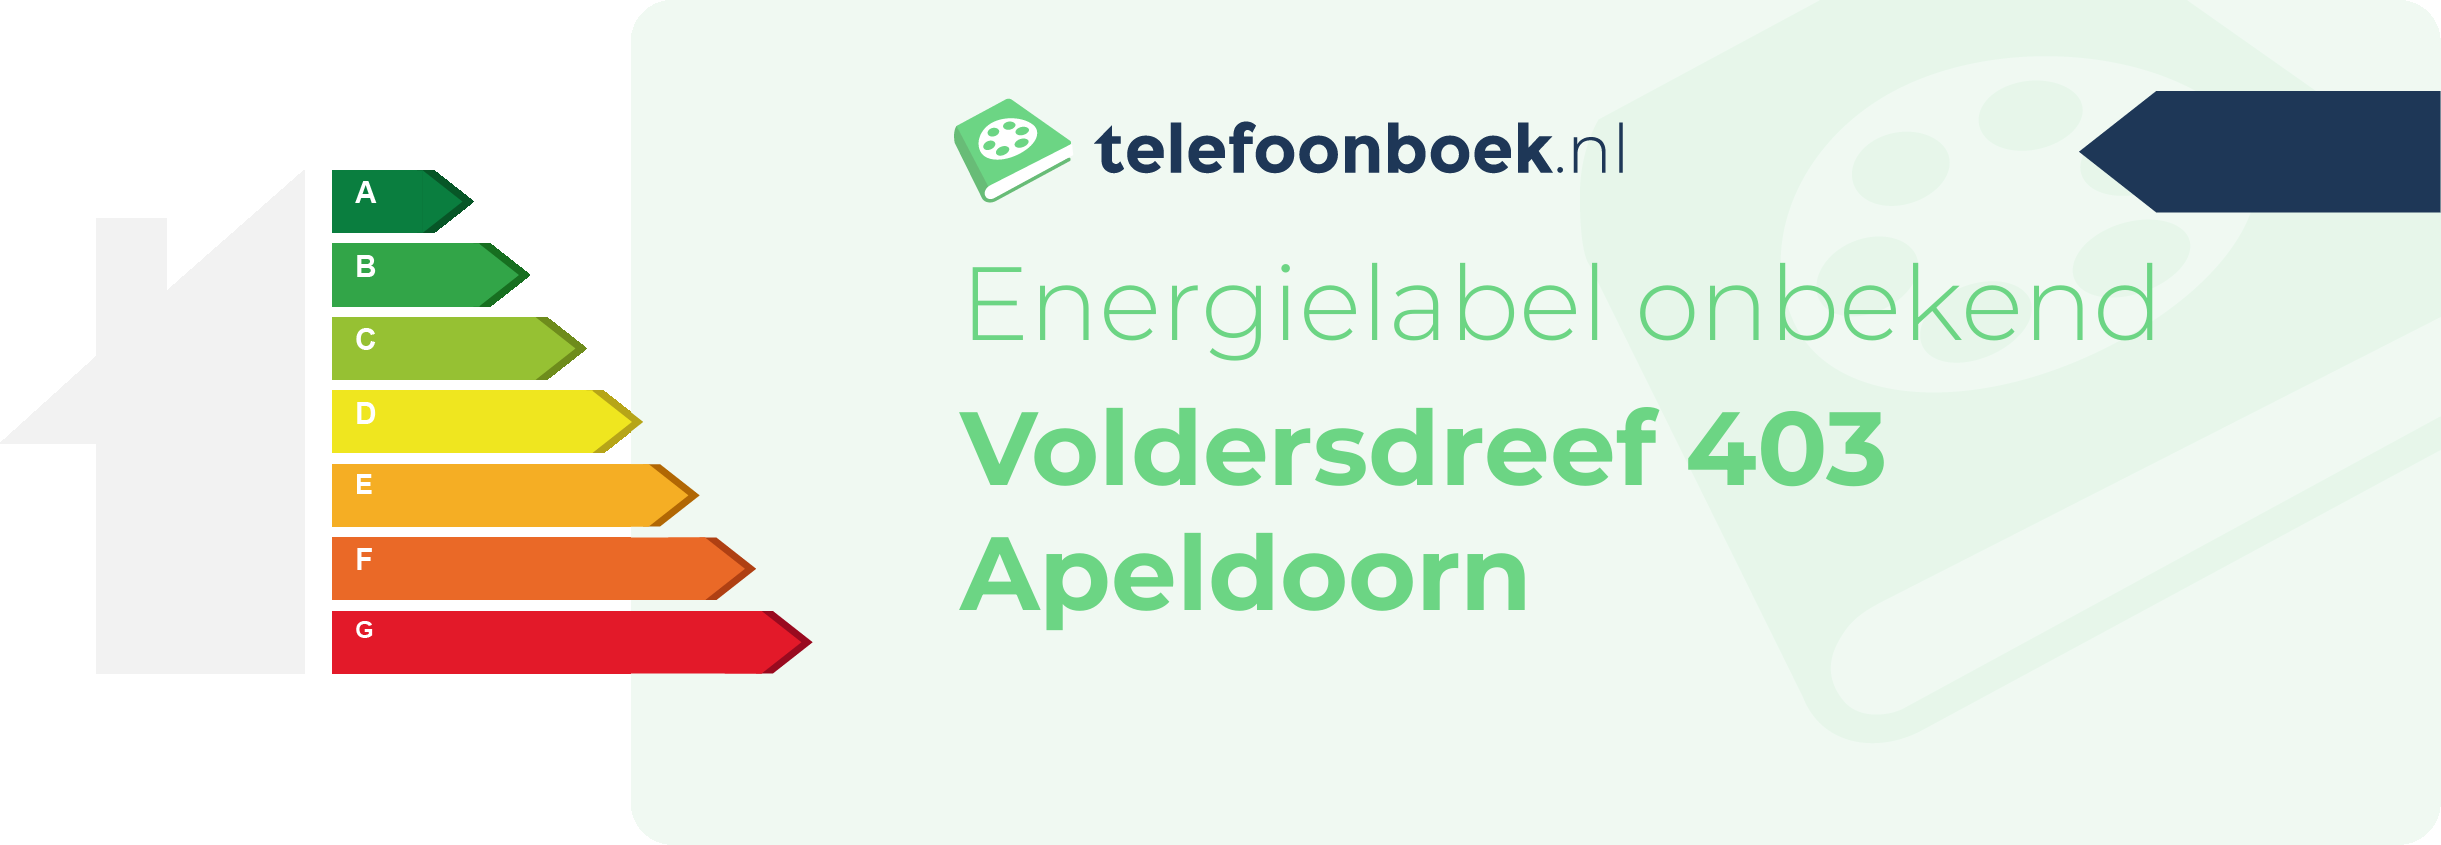 Energielabel Voldersdreef 403 Apeldoorn